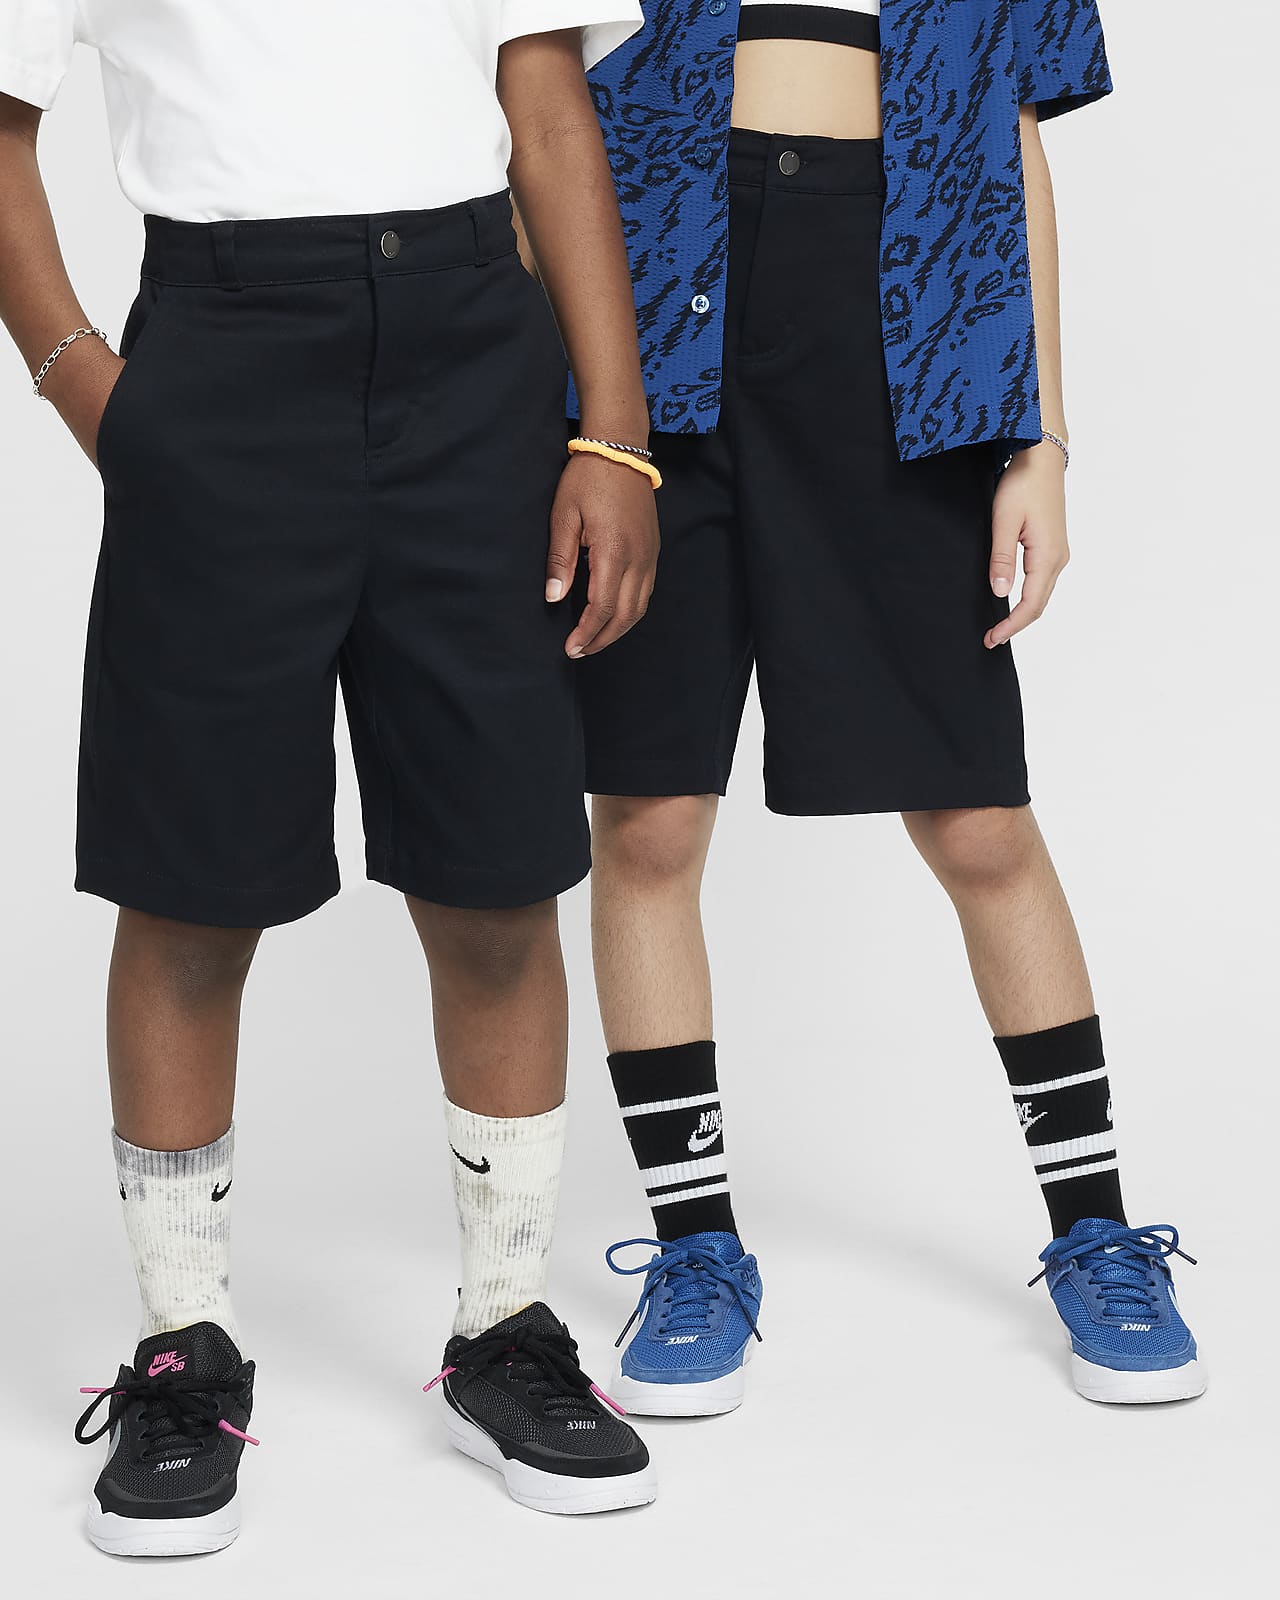 Nike SB Big Kids' Chino Skate Shorts